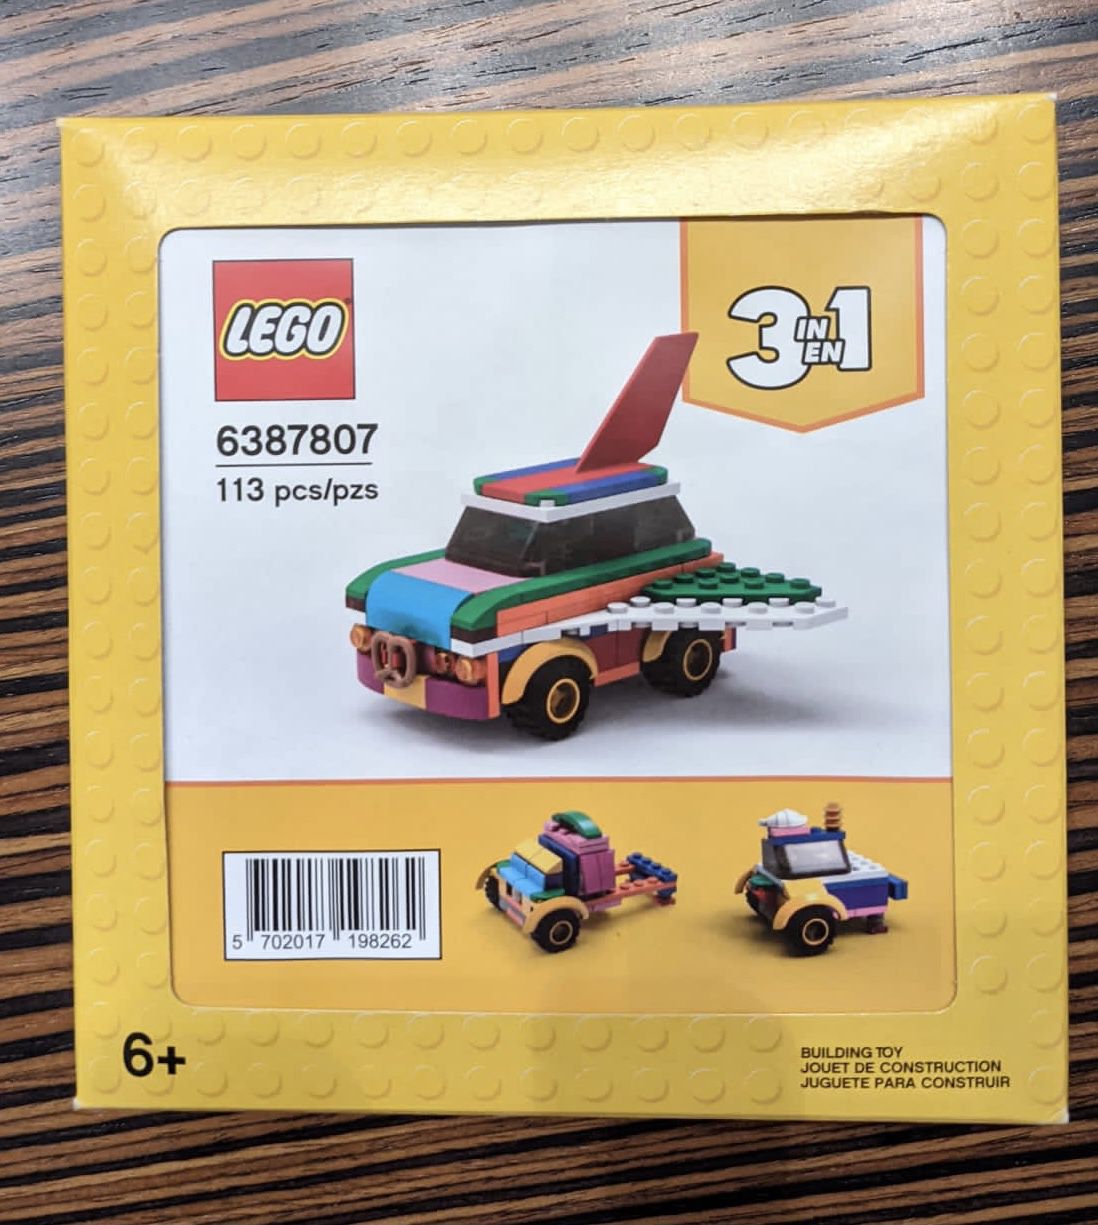 LEGO convertible flying car